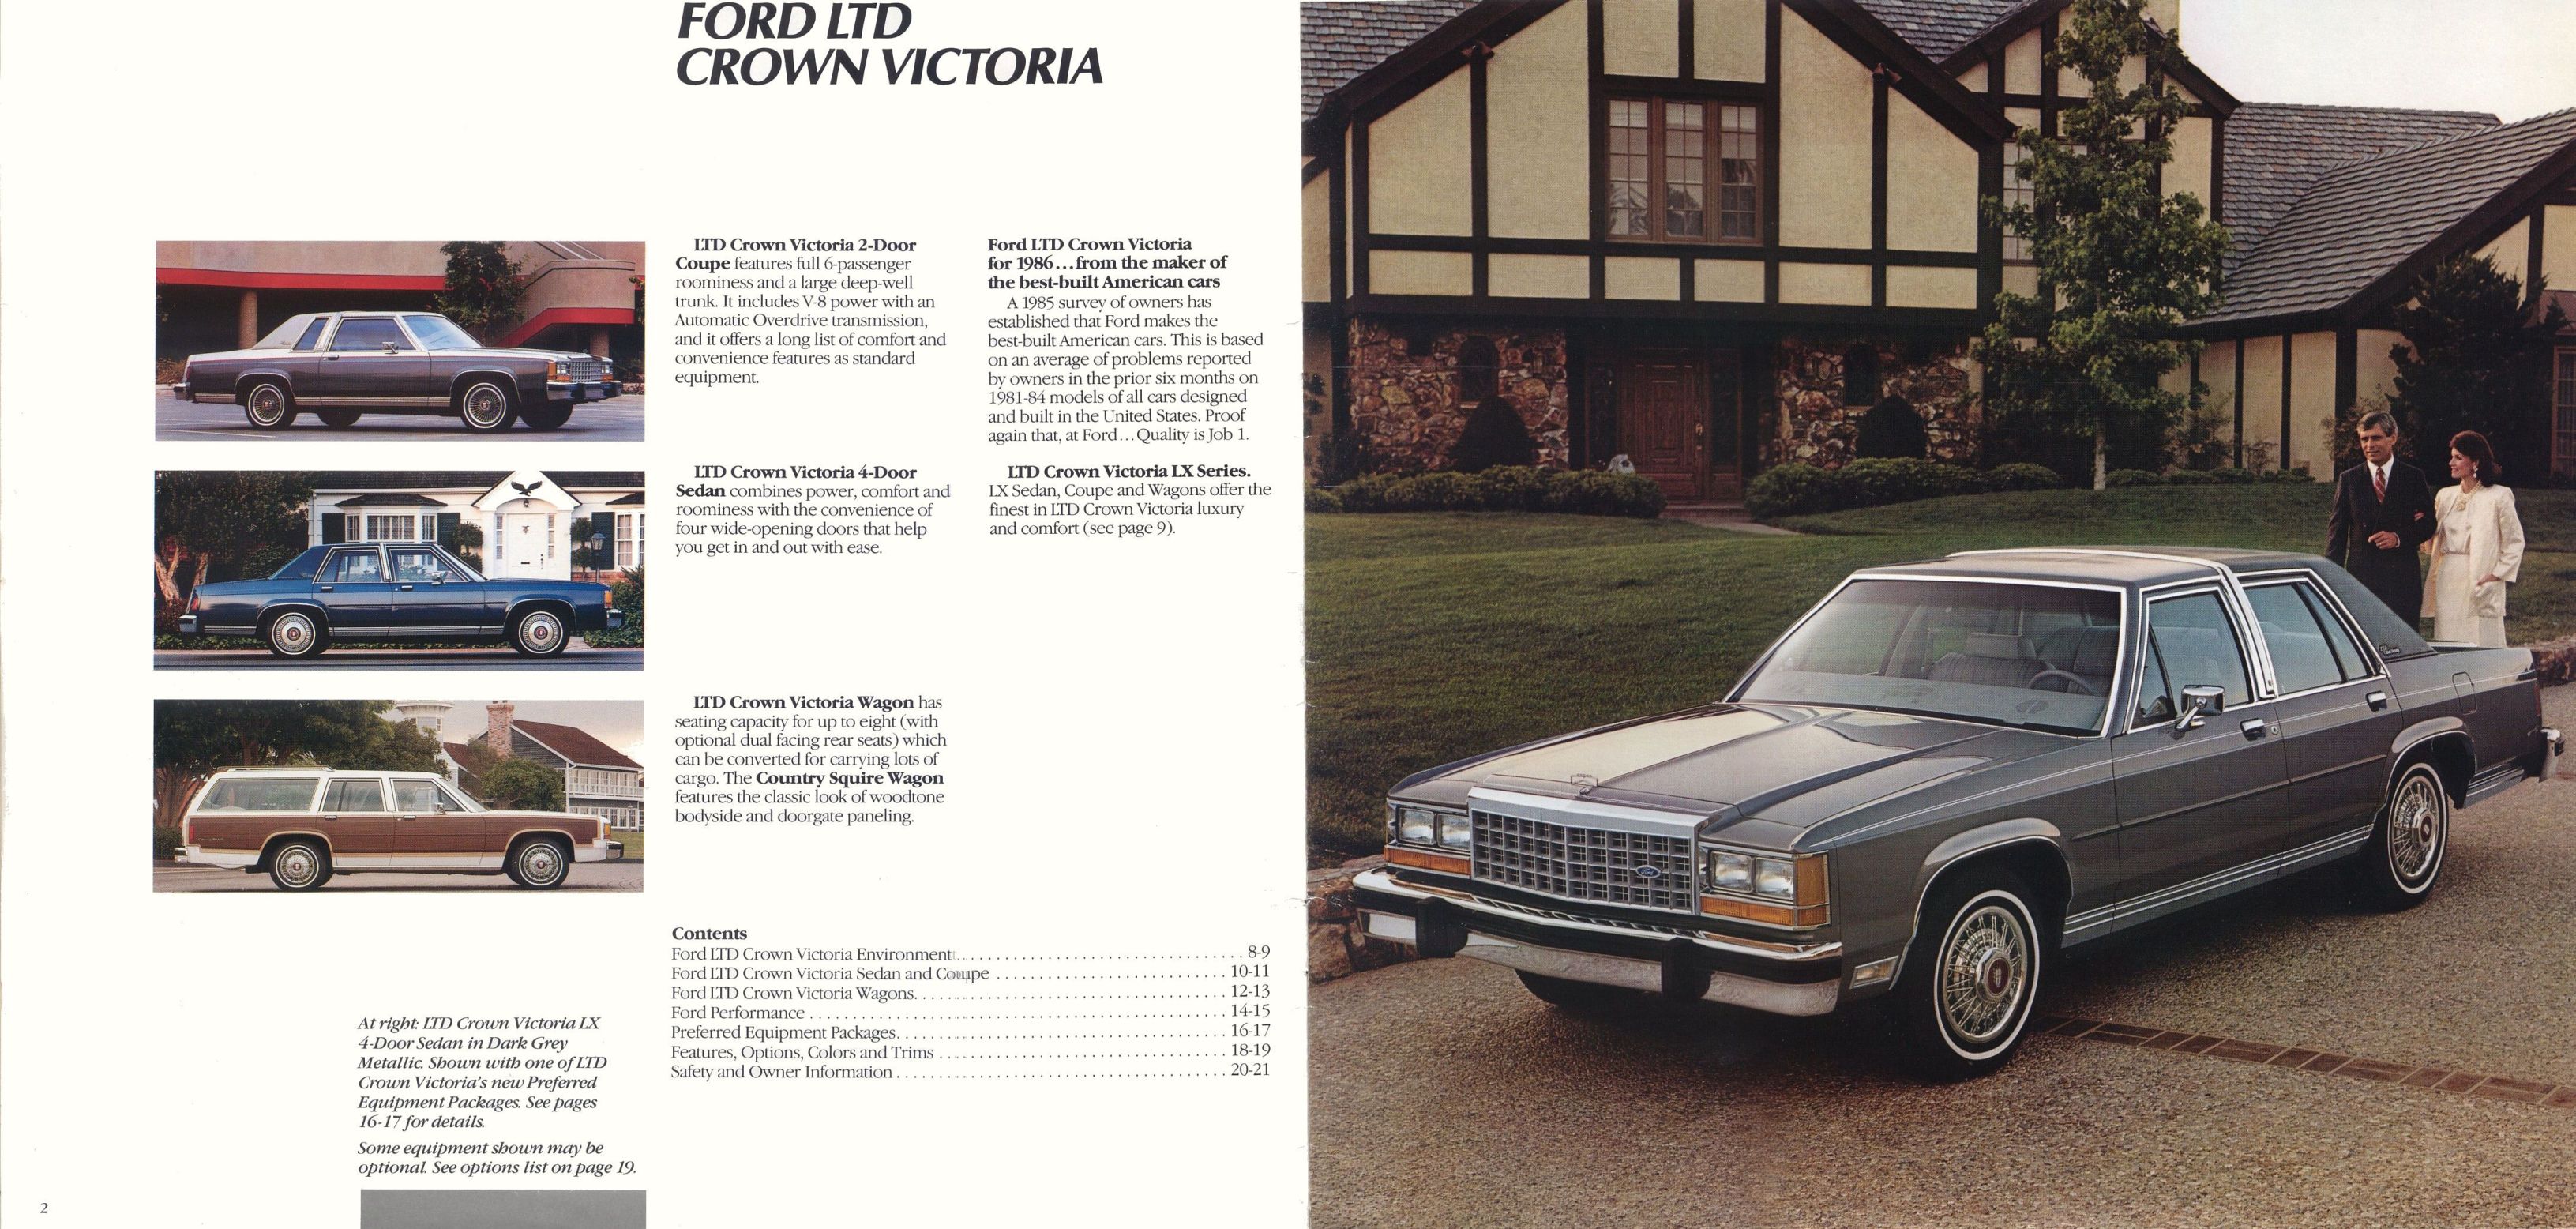 1986 Ford LTD Crown Victoria Brochure Page 1